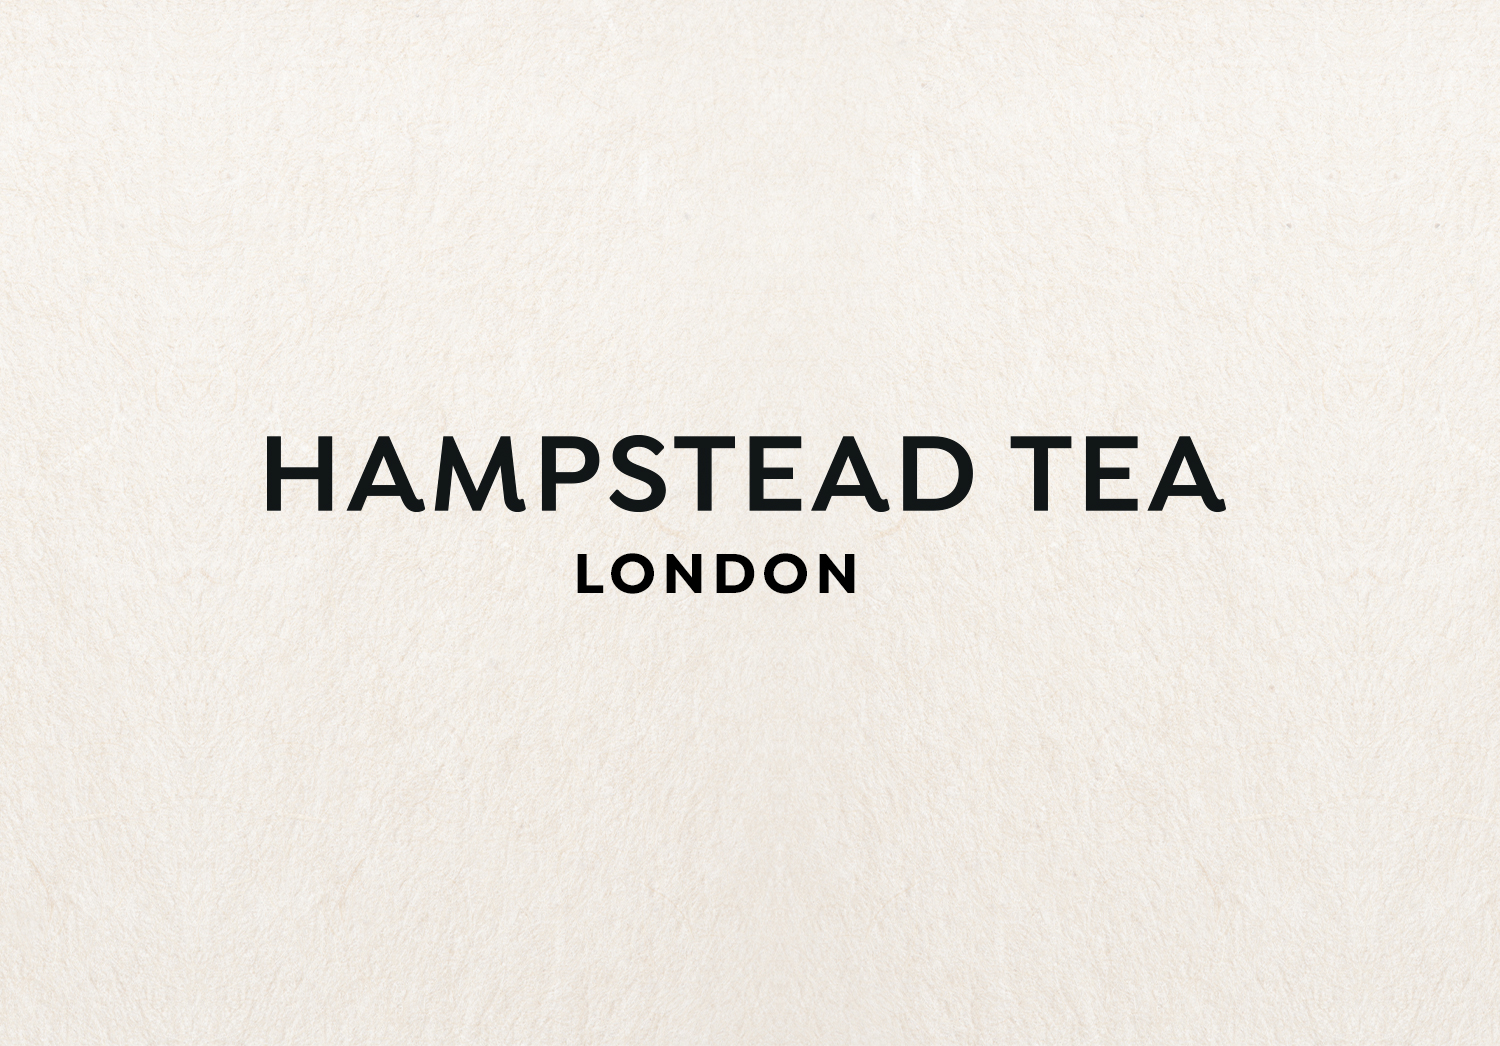 Hampstead茶包装设计